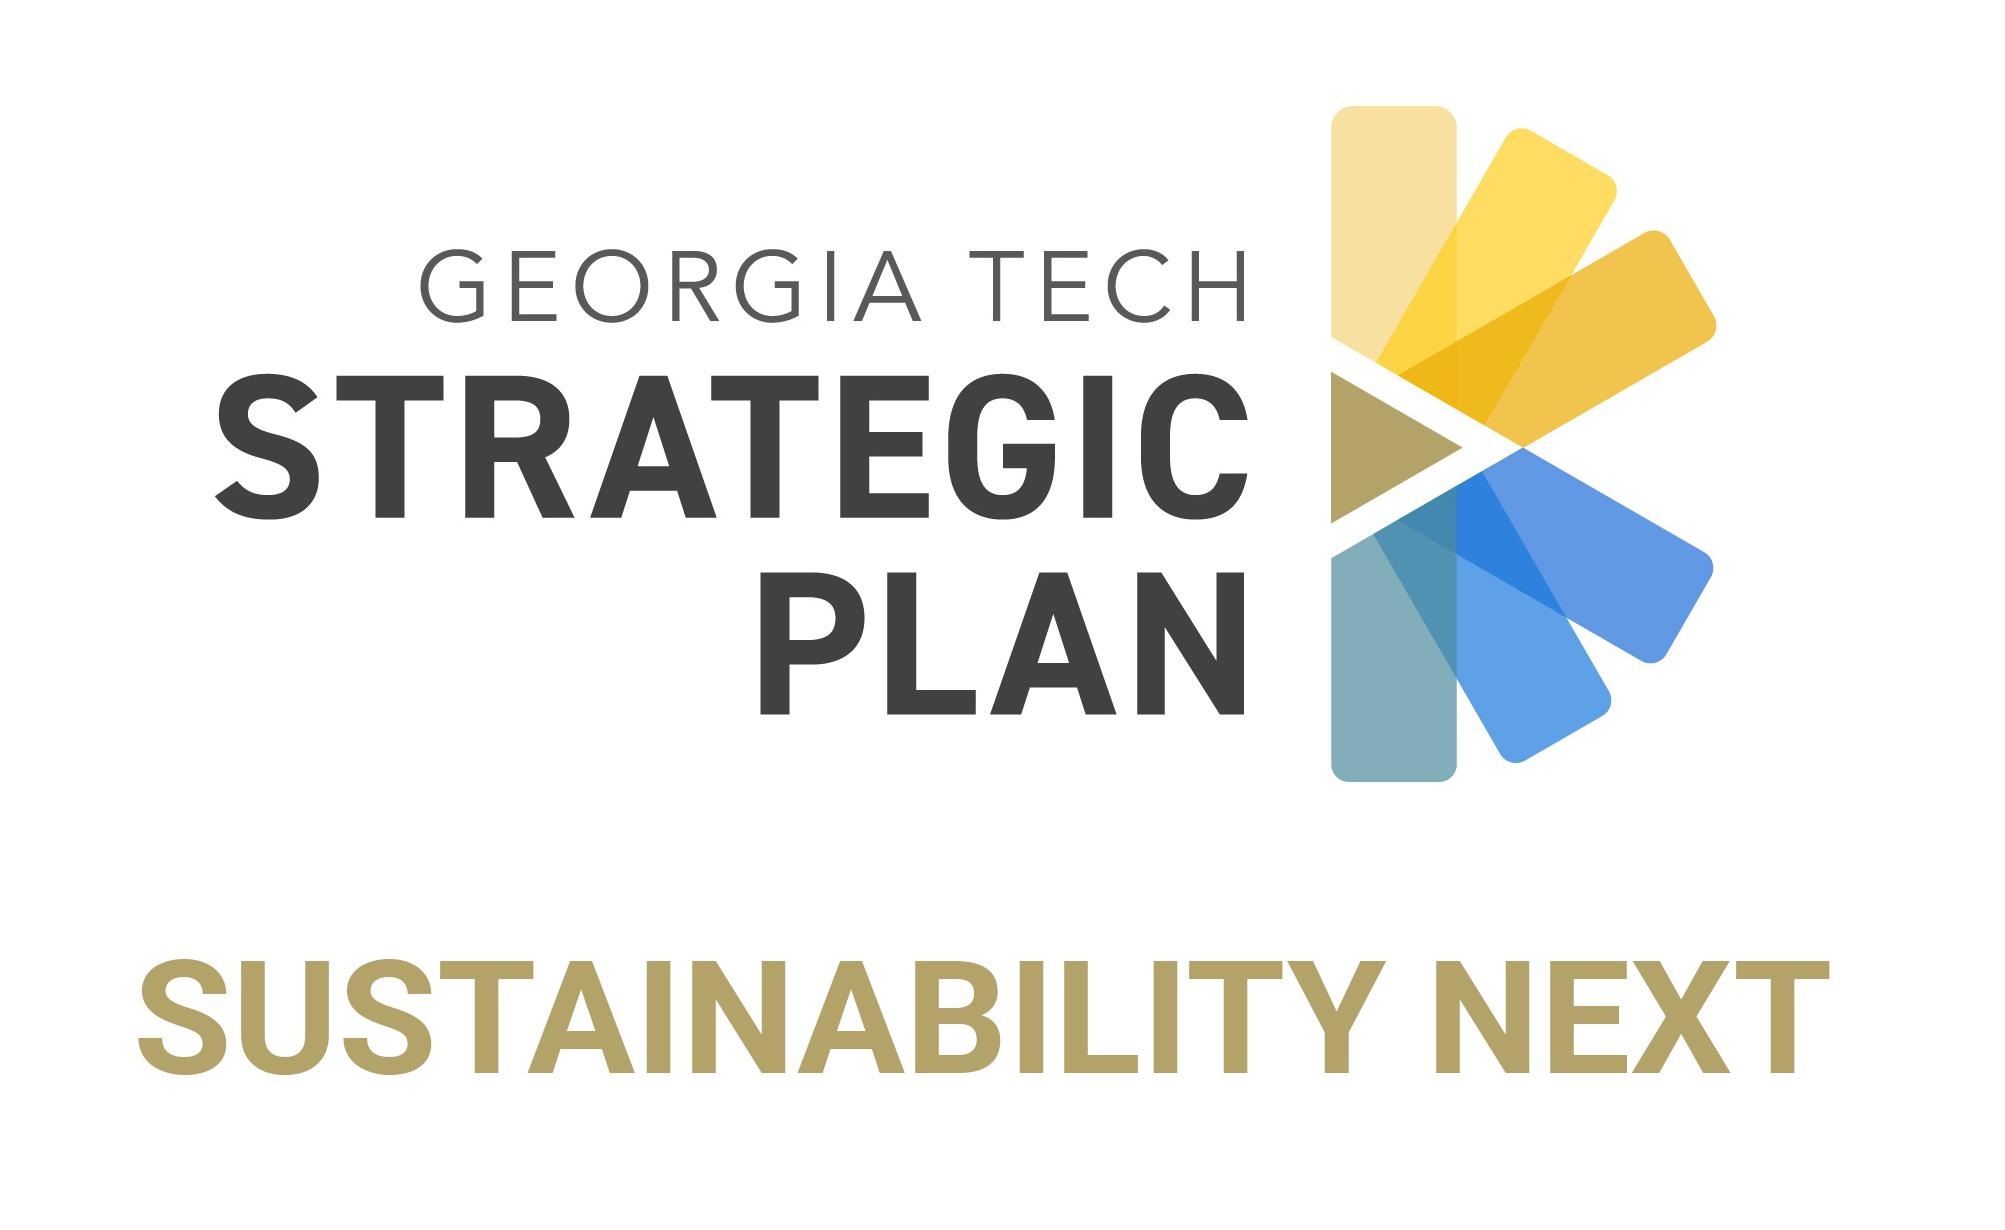 Georgia Tech Strategic Plan logo with "Sustainability Next" text underneath.